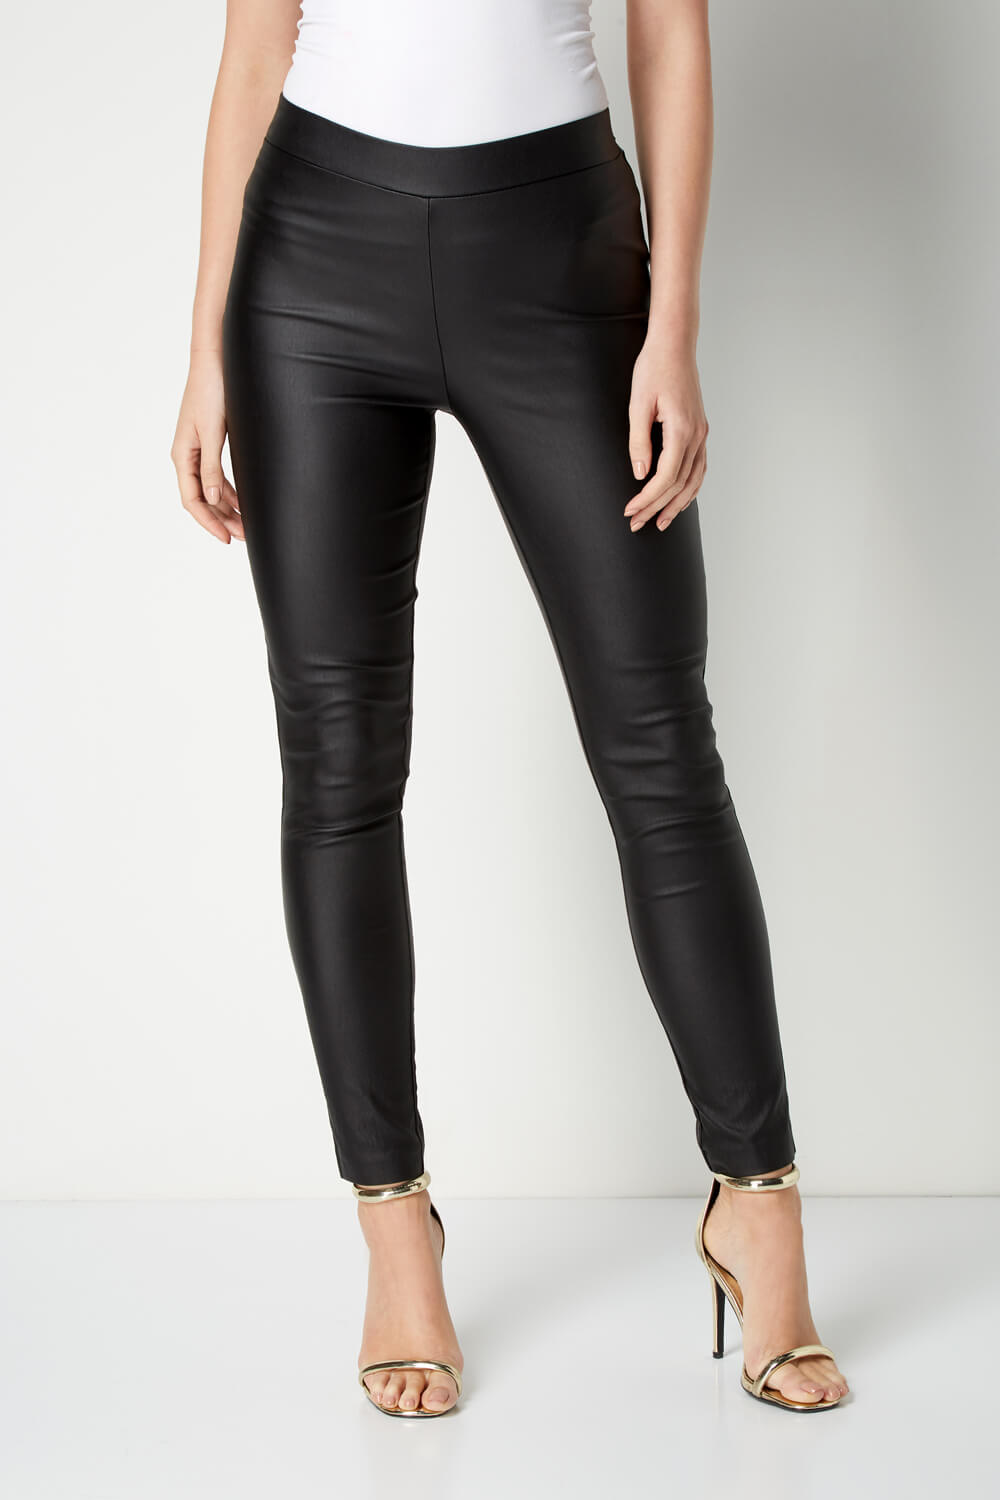 Buy HM Women Black Faux Leather Trousers  Trousers for Women 13147644   Myntra